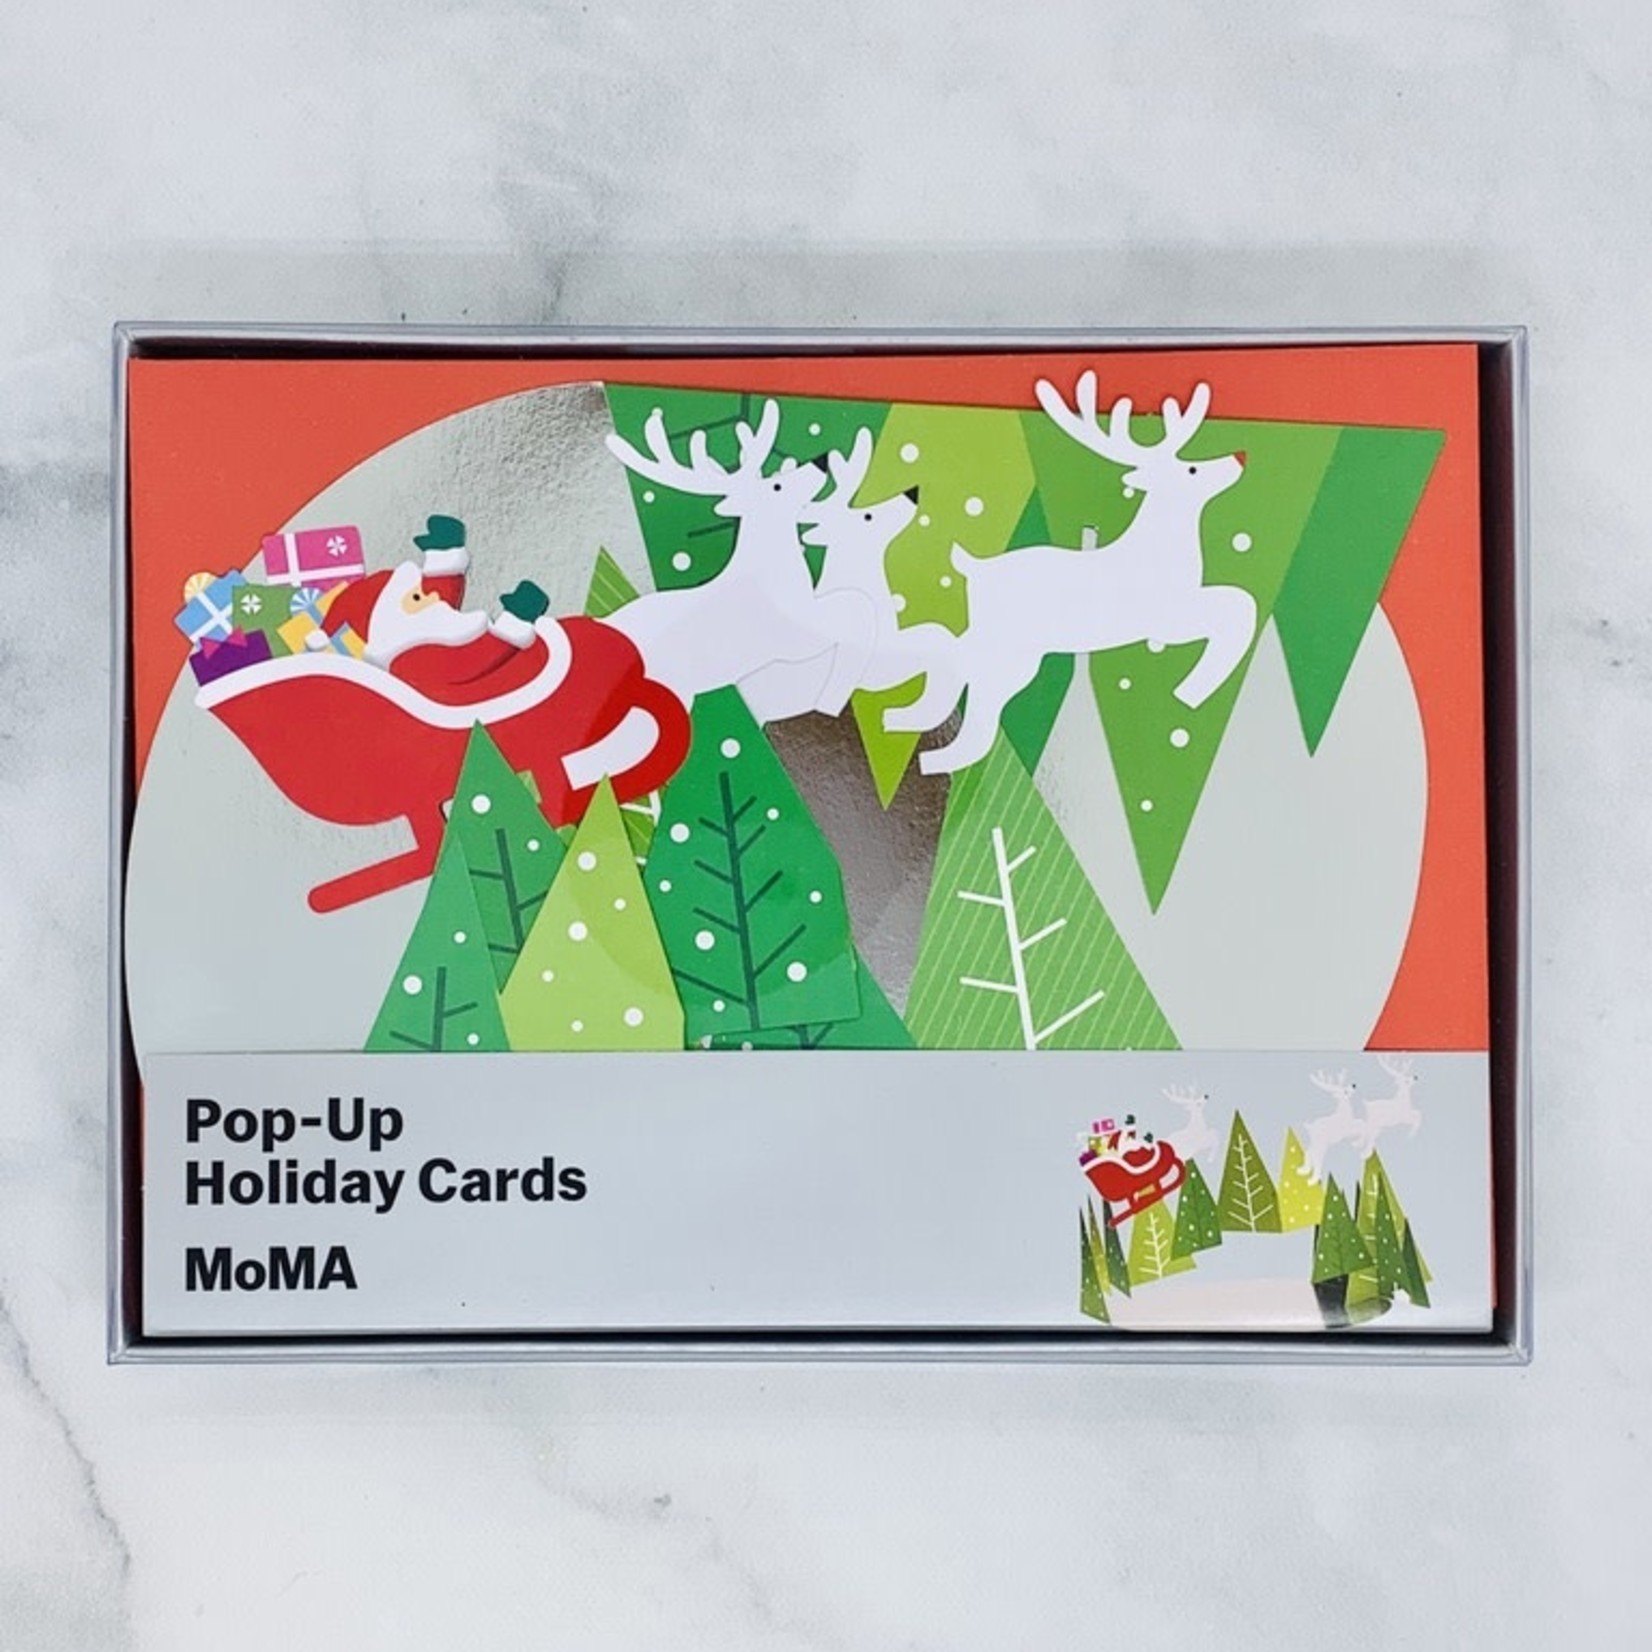 MoMA Boxed Holiday Cards